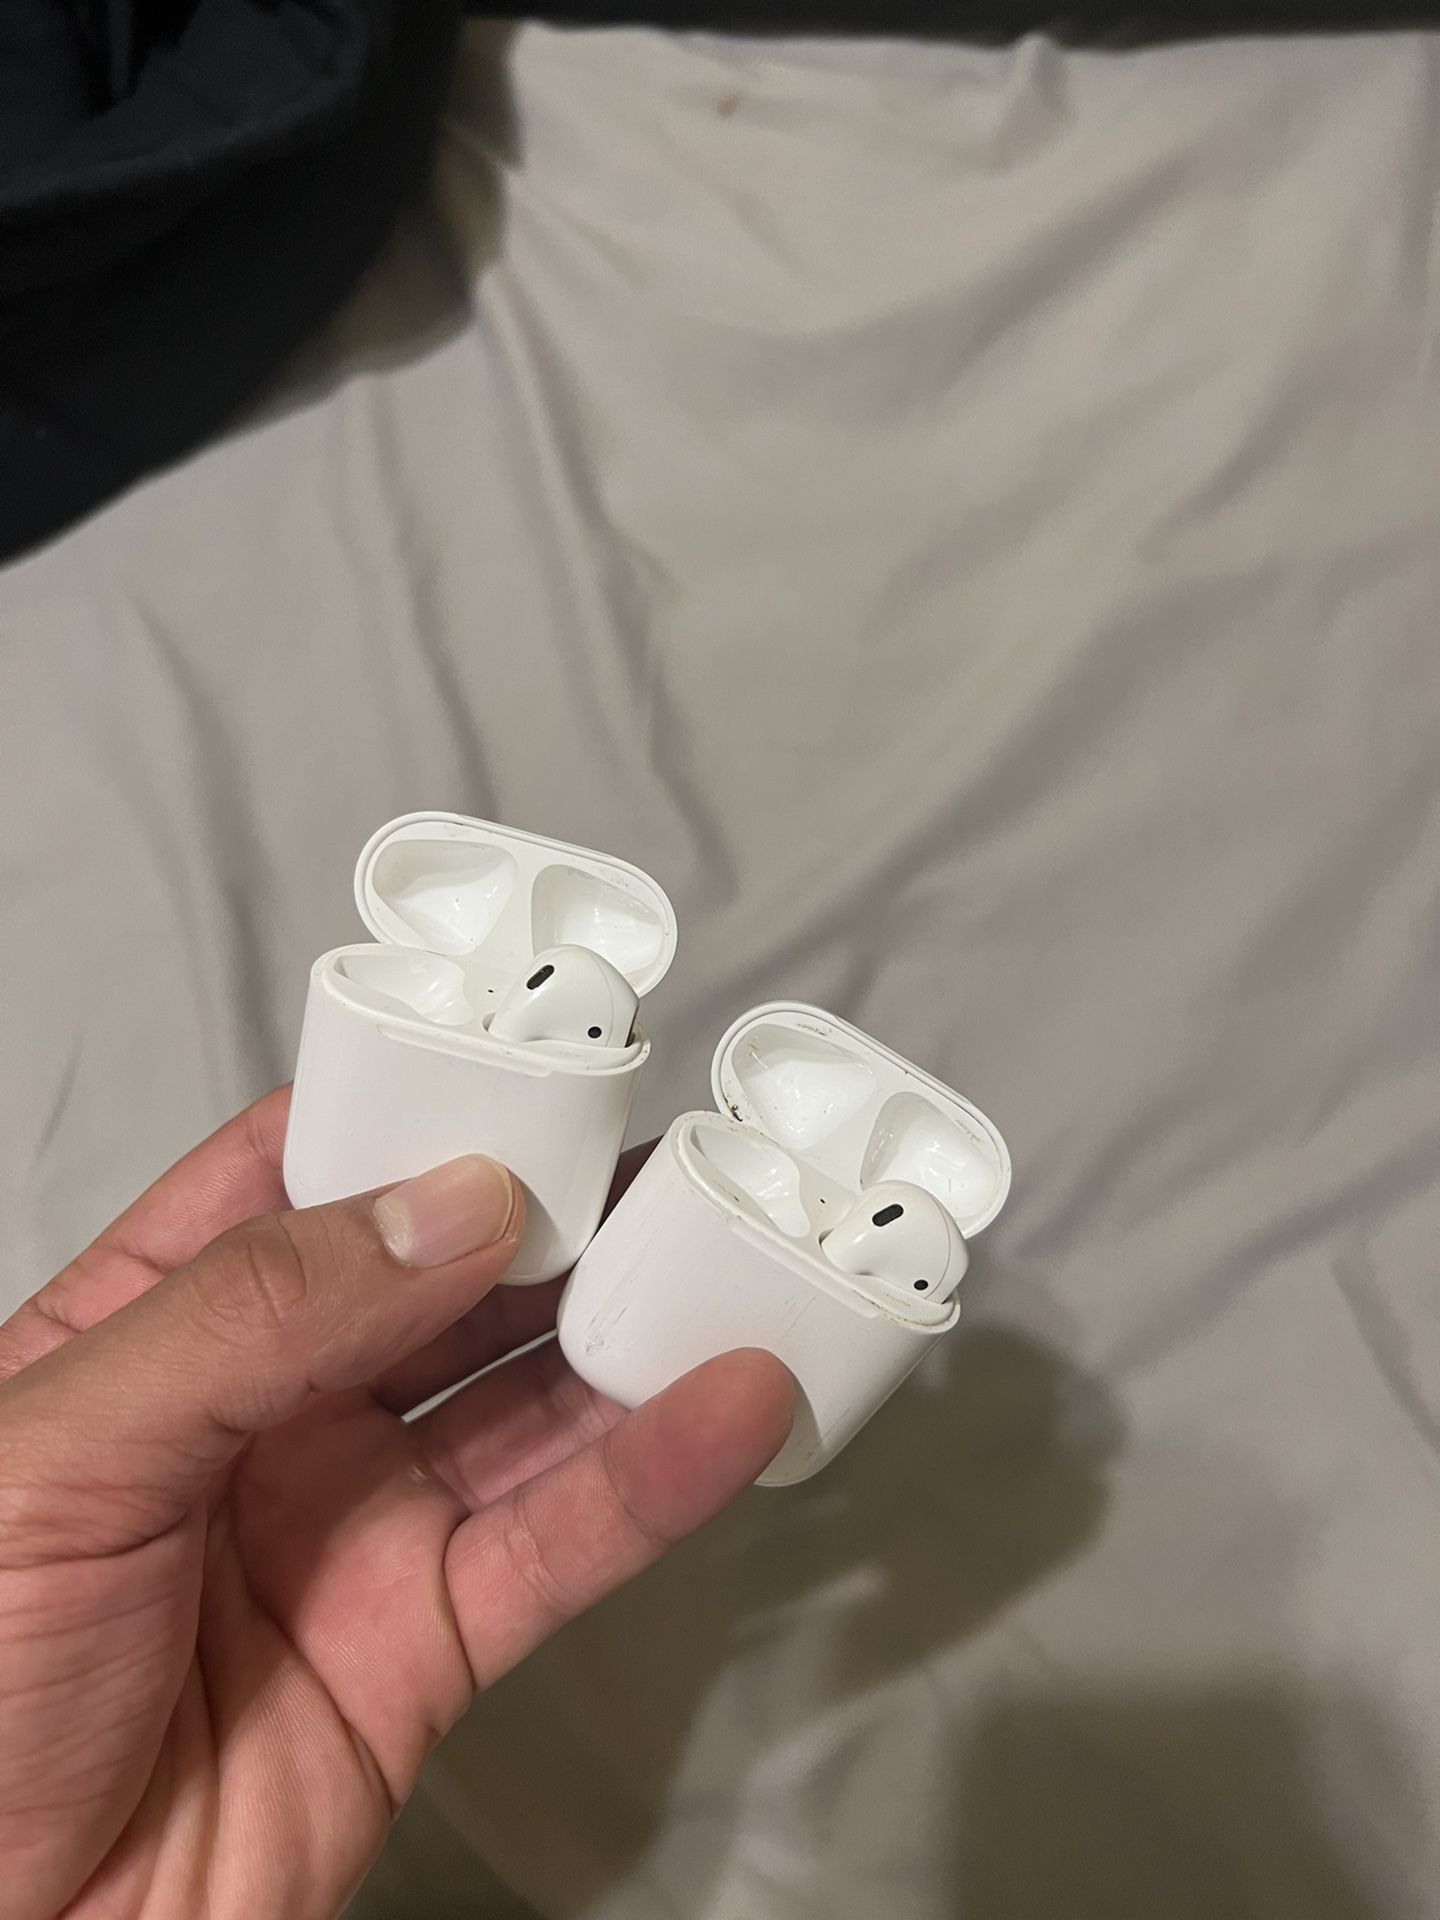 2x Airpod Wireless Headphones Missing Left Air Pod On Both 